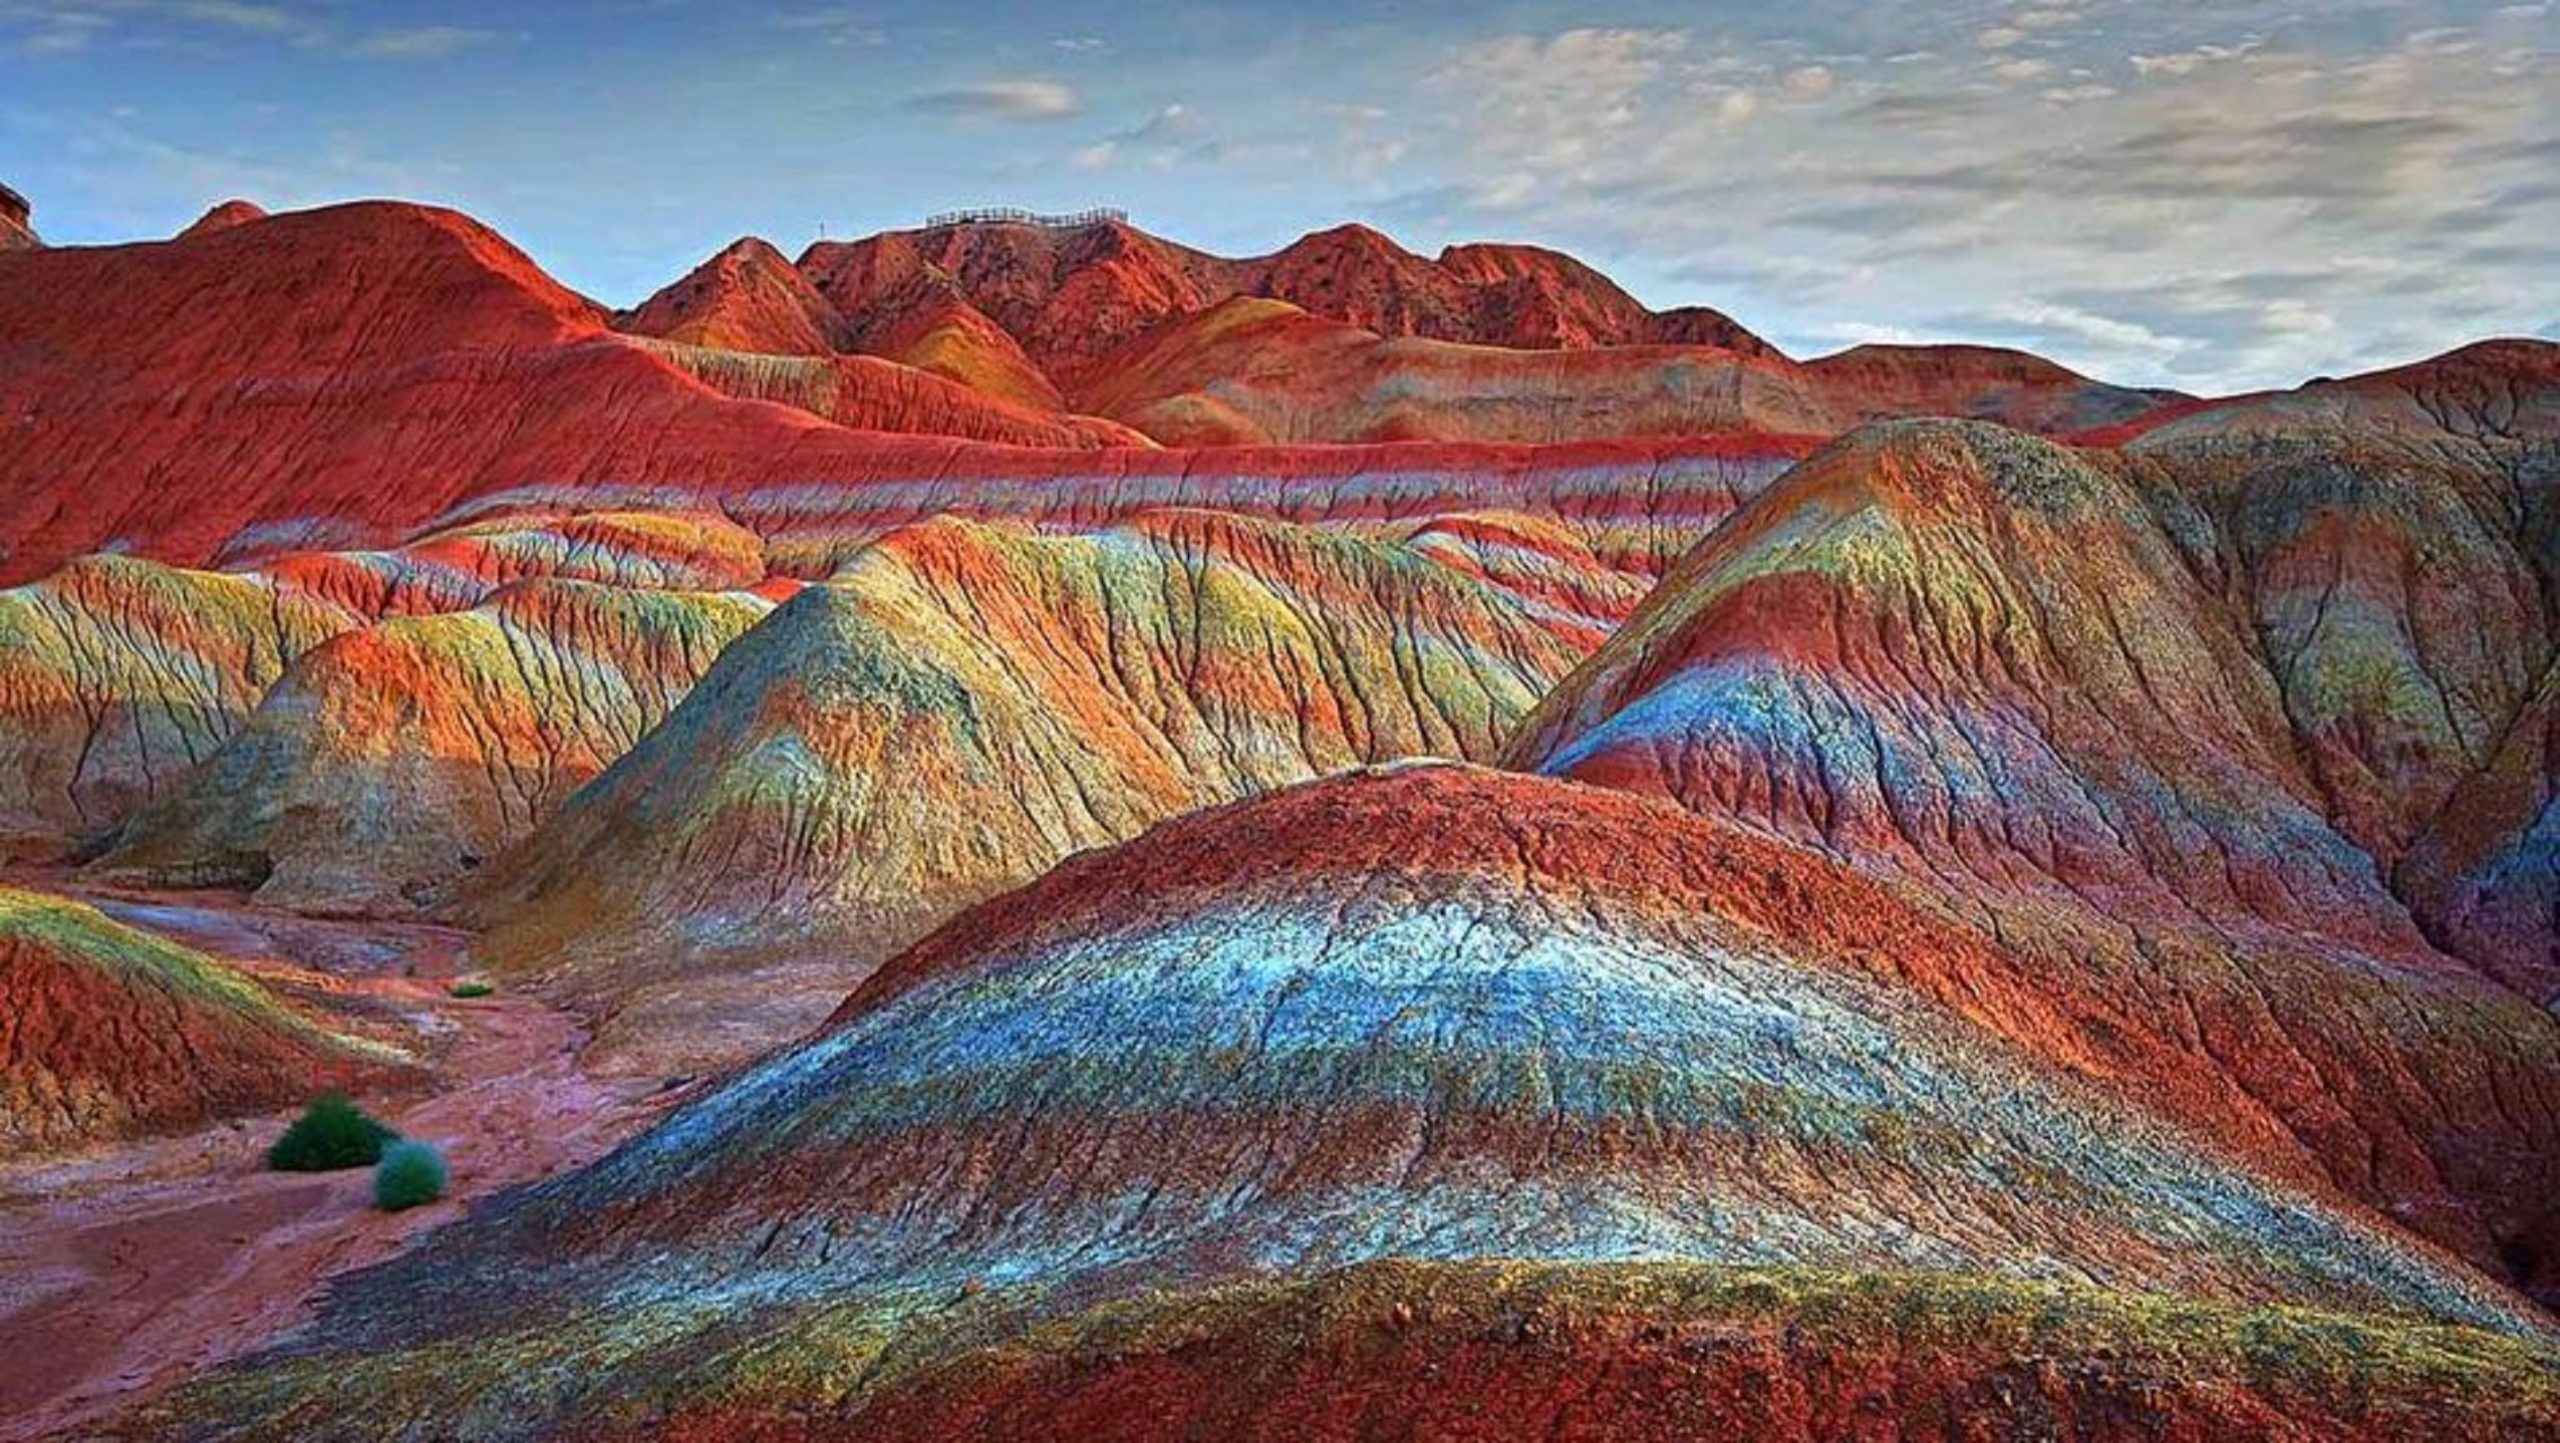 Zhangye Danxia Landform - The Rainbow Mountains of China